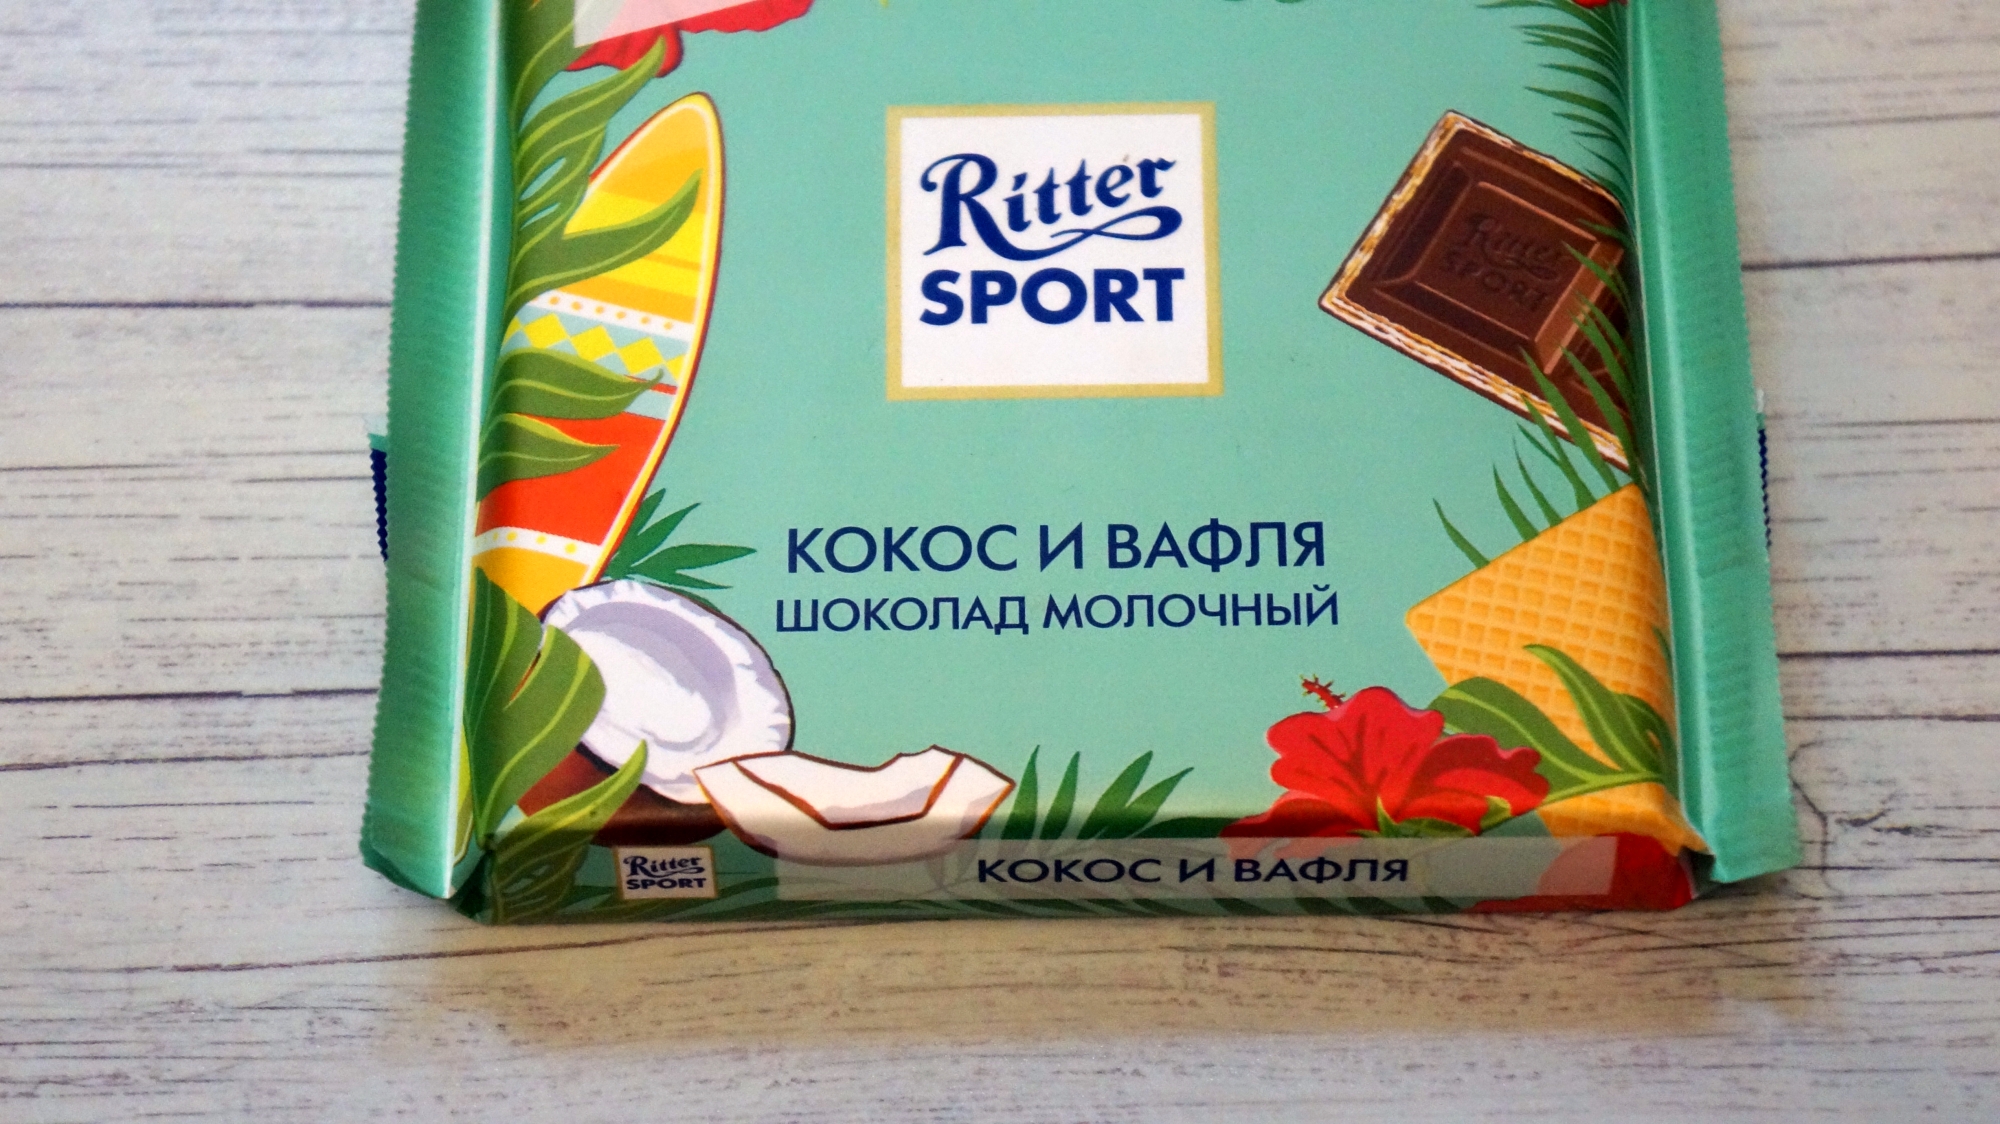 Шоколад Ritter Sport Кокос и вафля